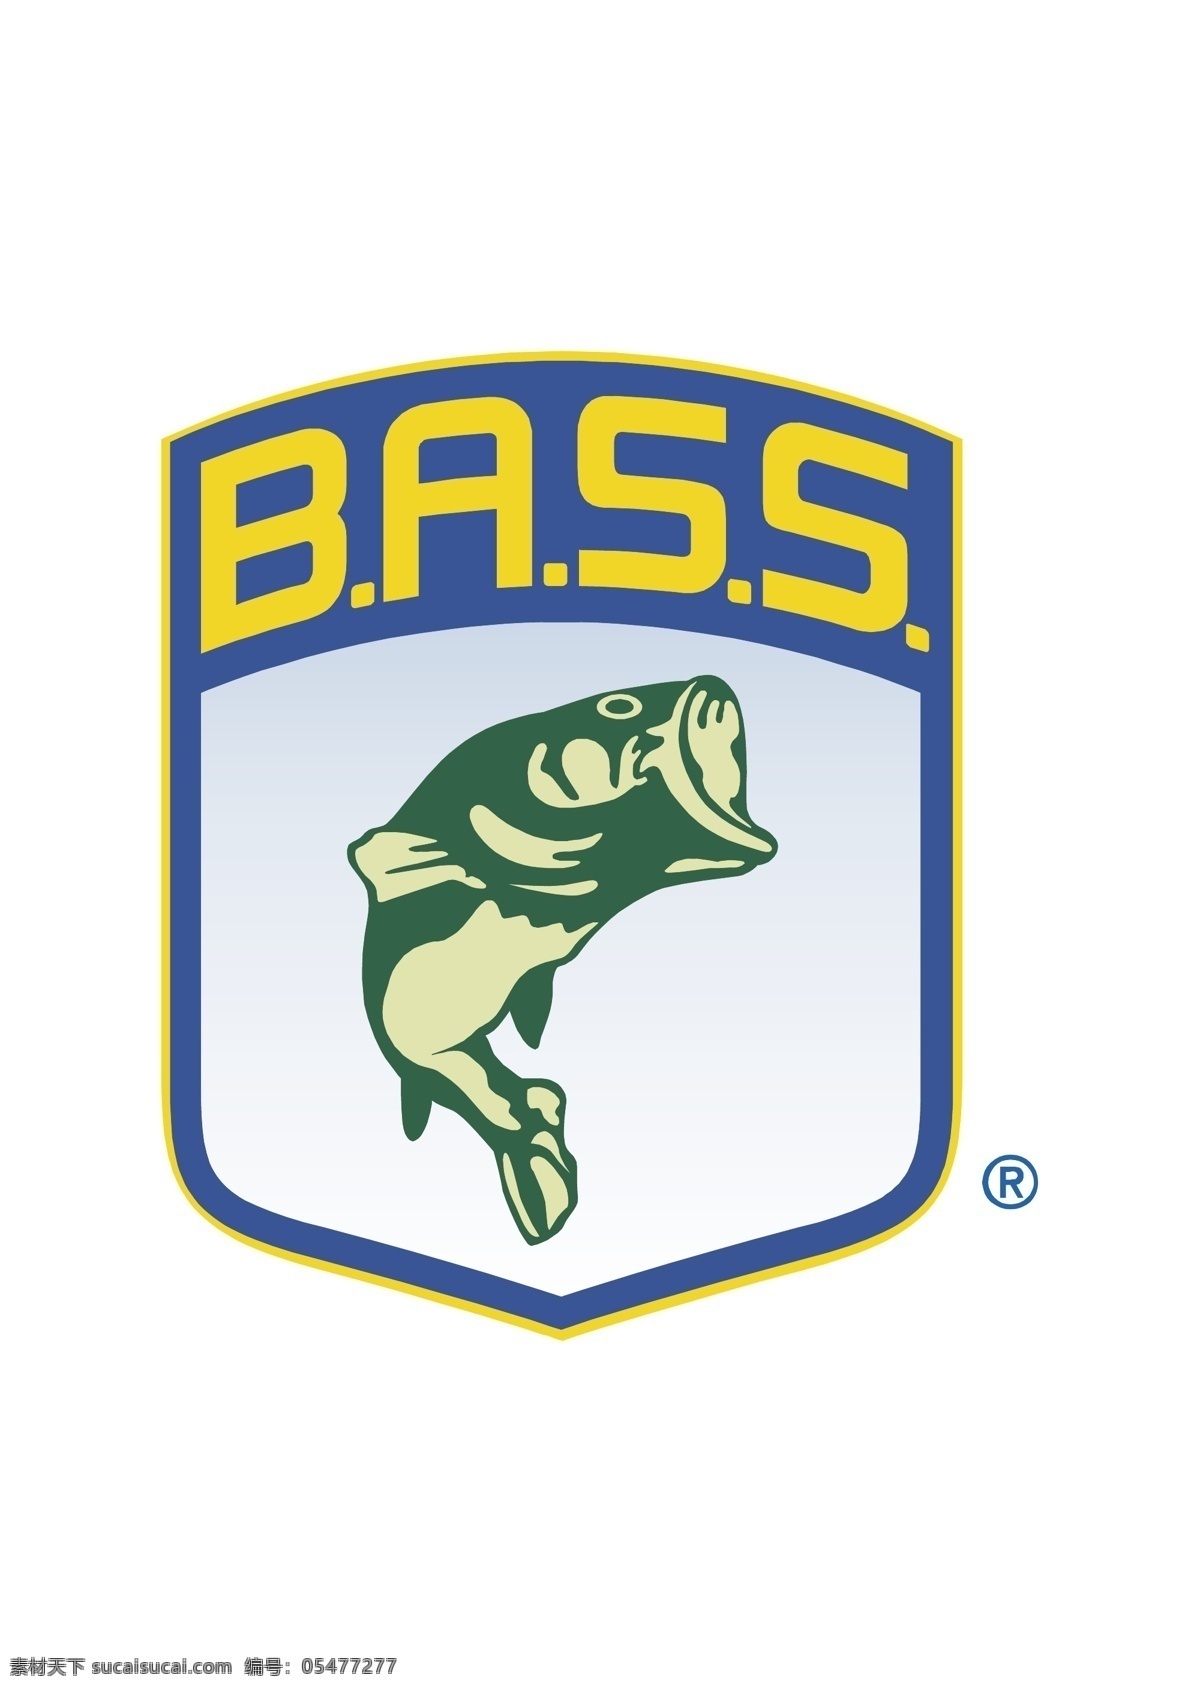 bass logo大全 logo 设计欣赏 商业矢量 矢量下载 运动 标志 标志设计 欣赏 网页矢量 矢量图 其他矢量图